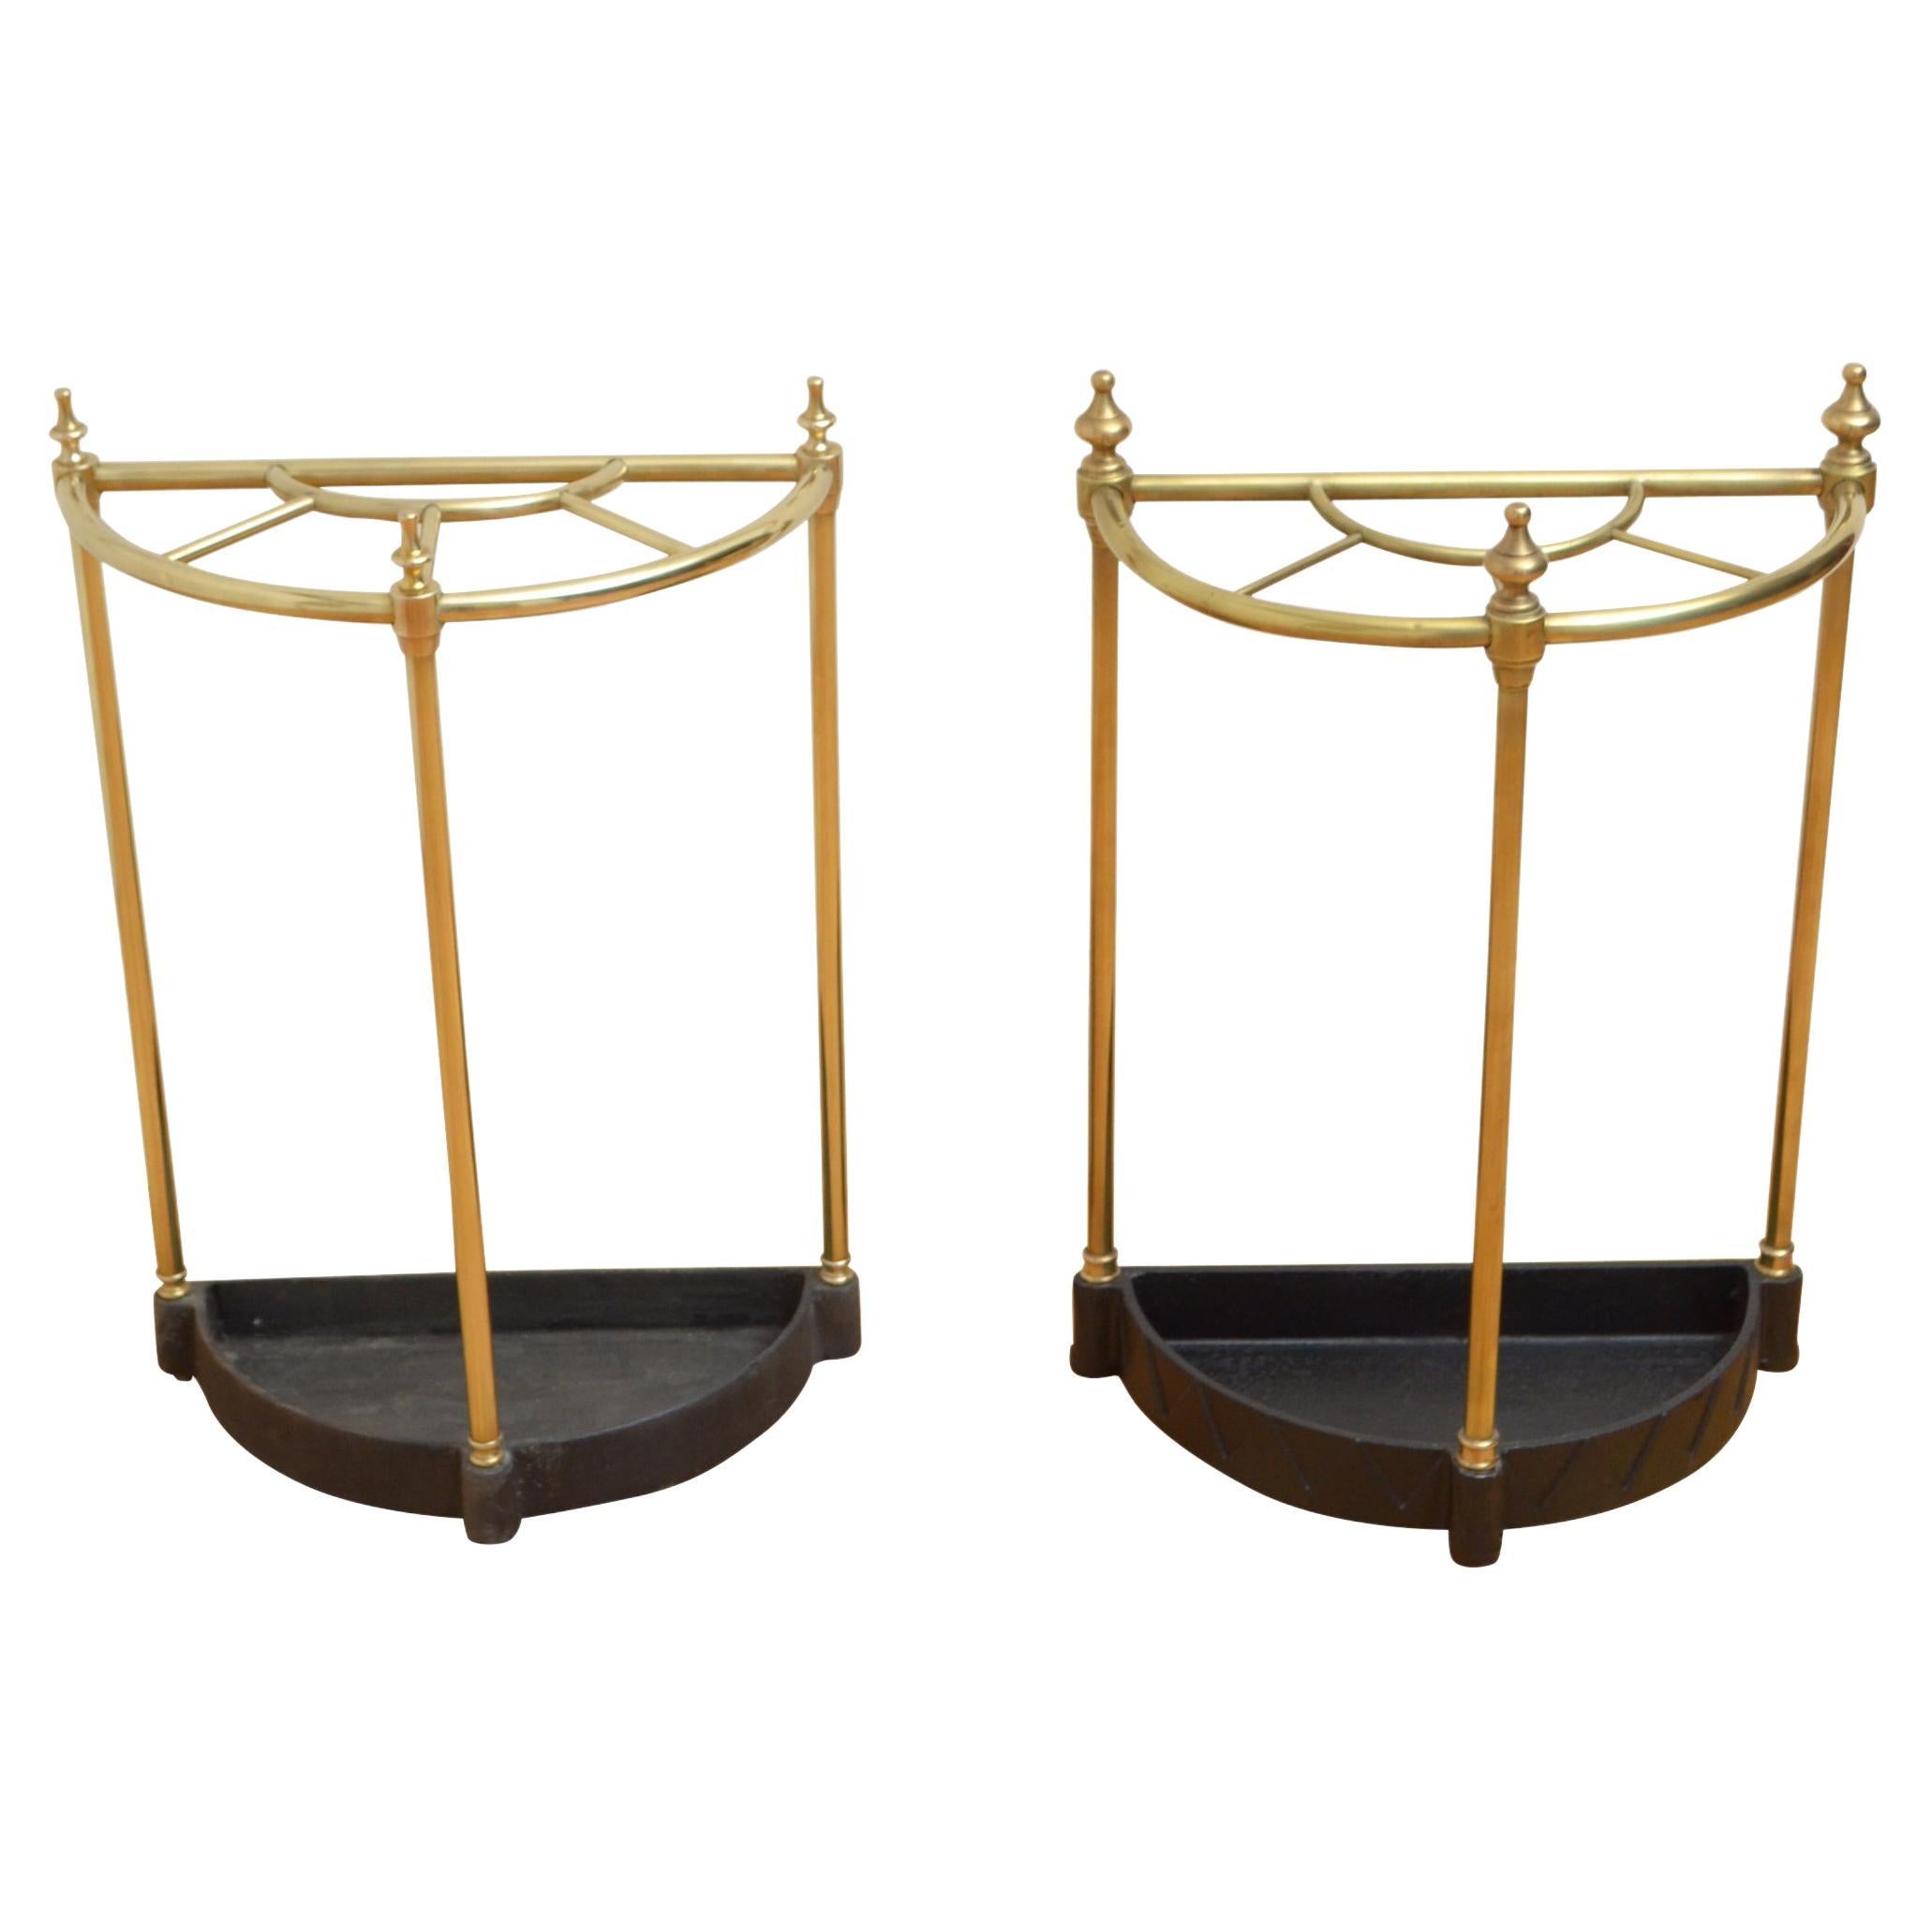 Matched Pair of Brass Umbrella Stands